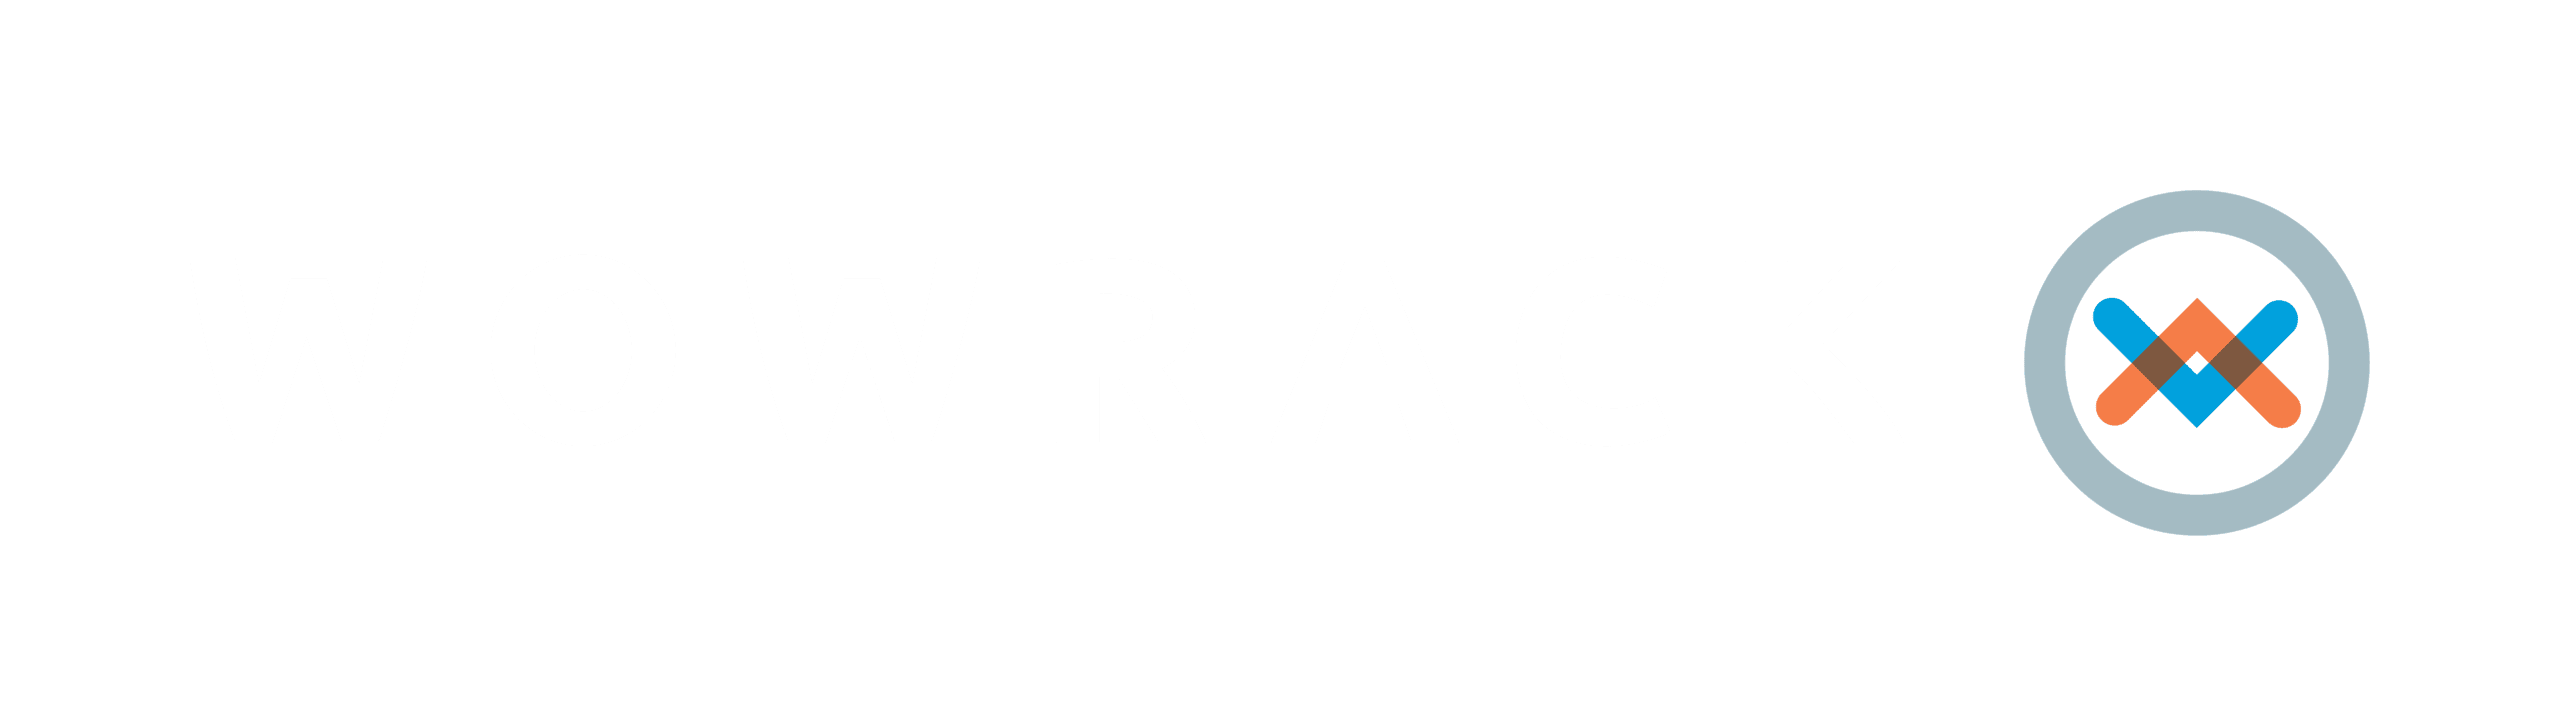 Logo Wowrack Horizontal breathing space-02